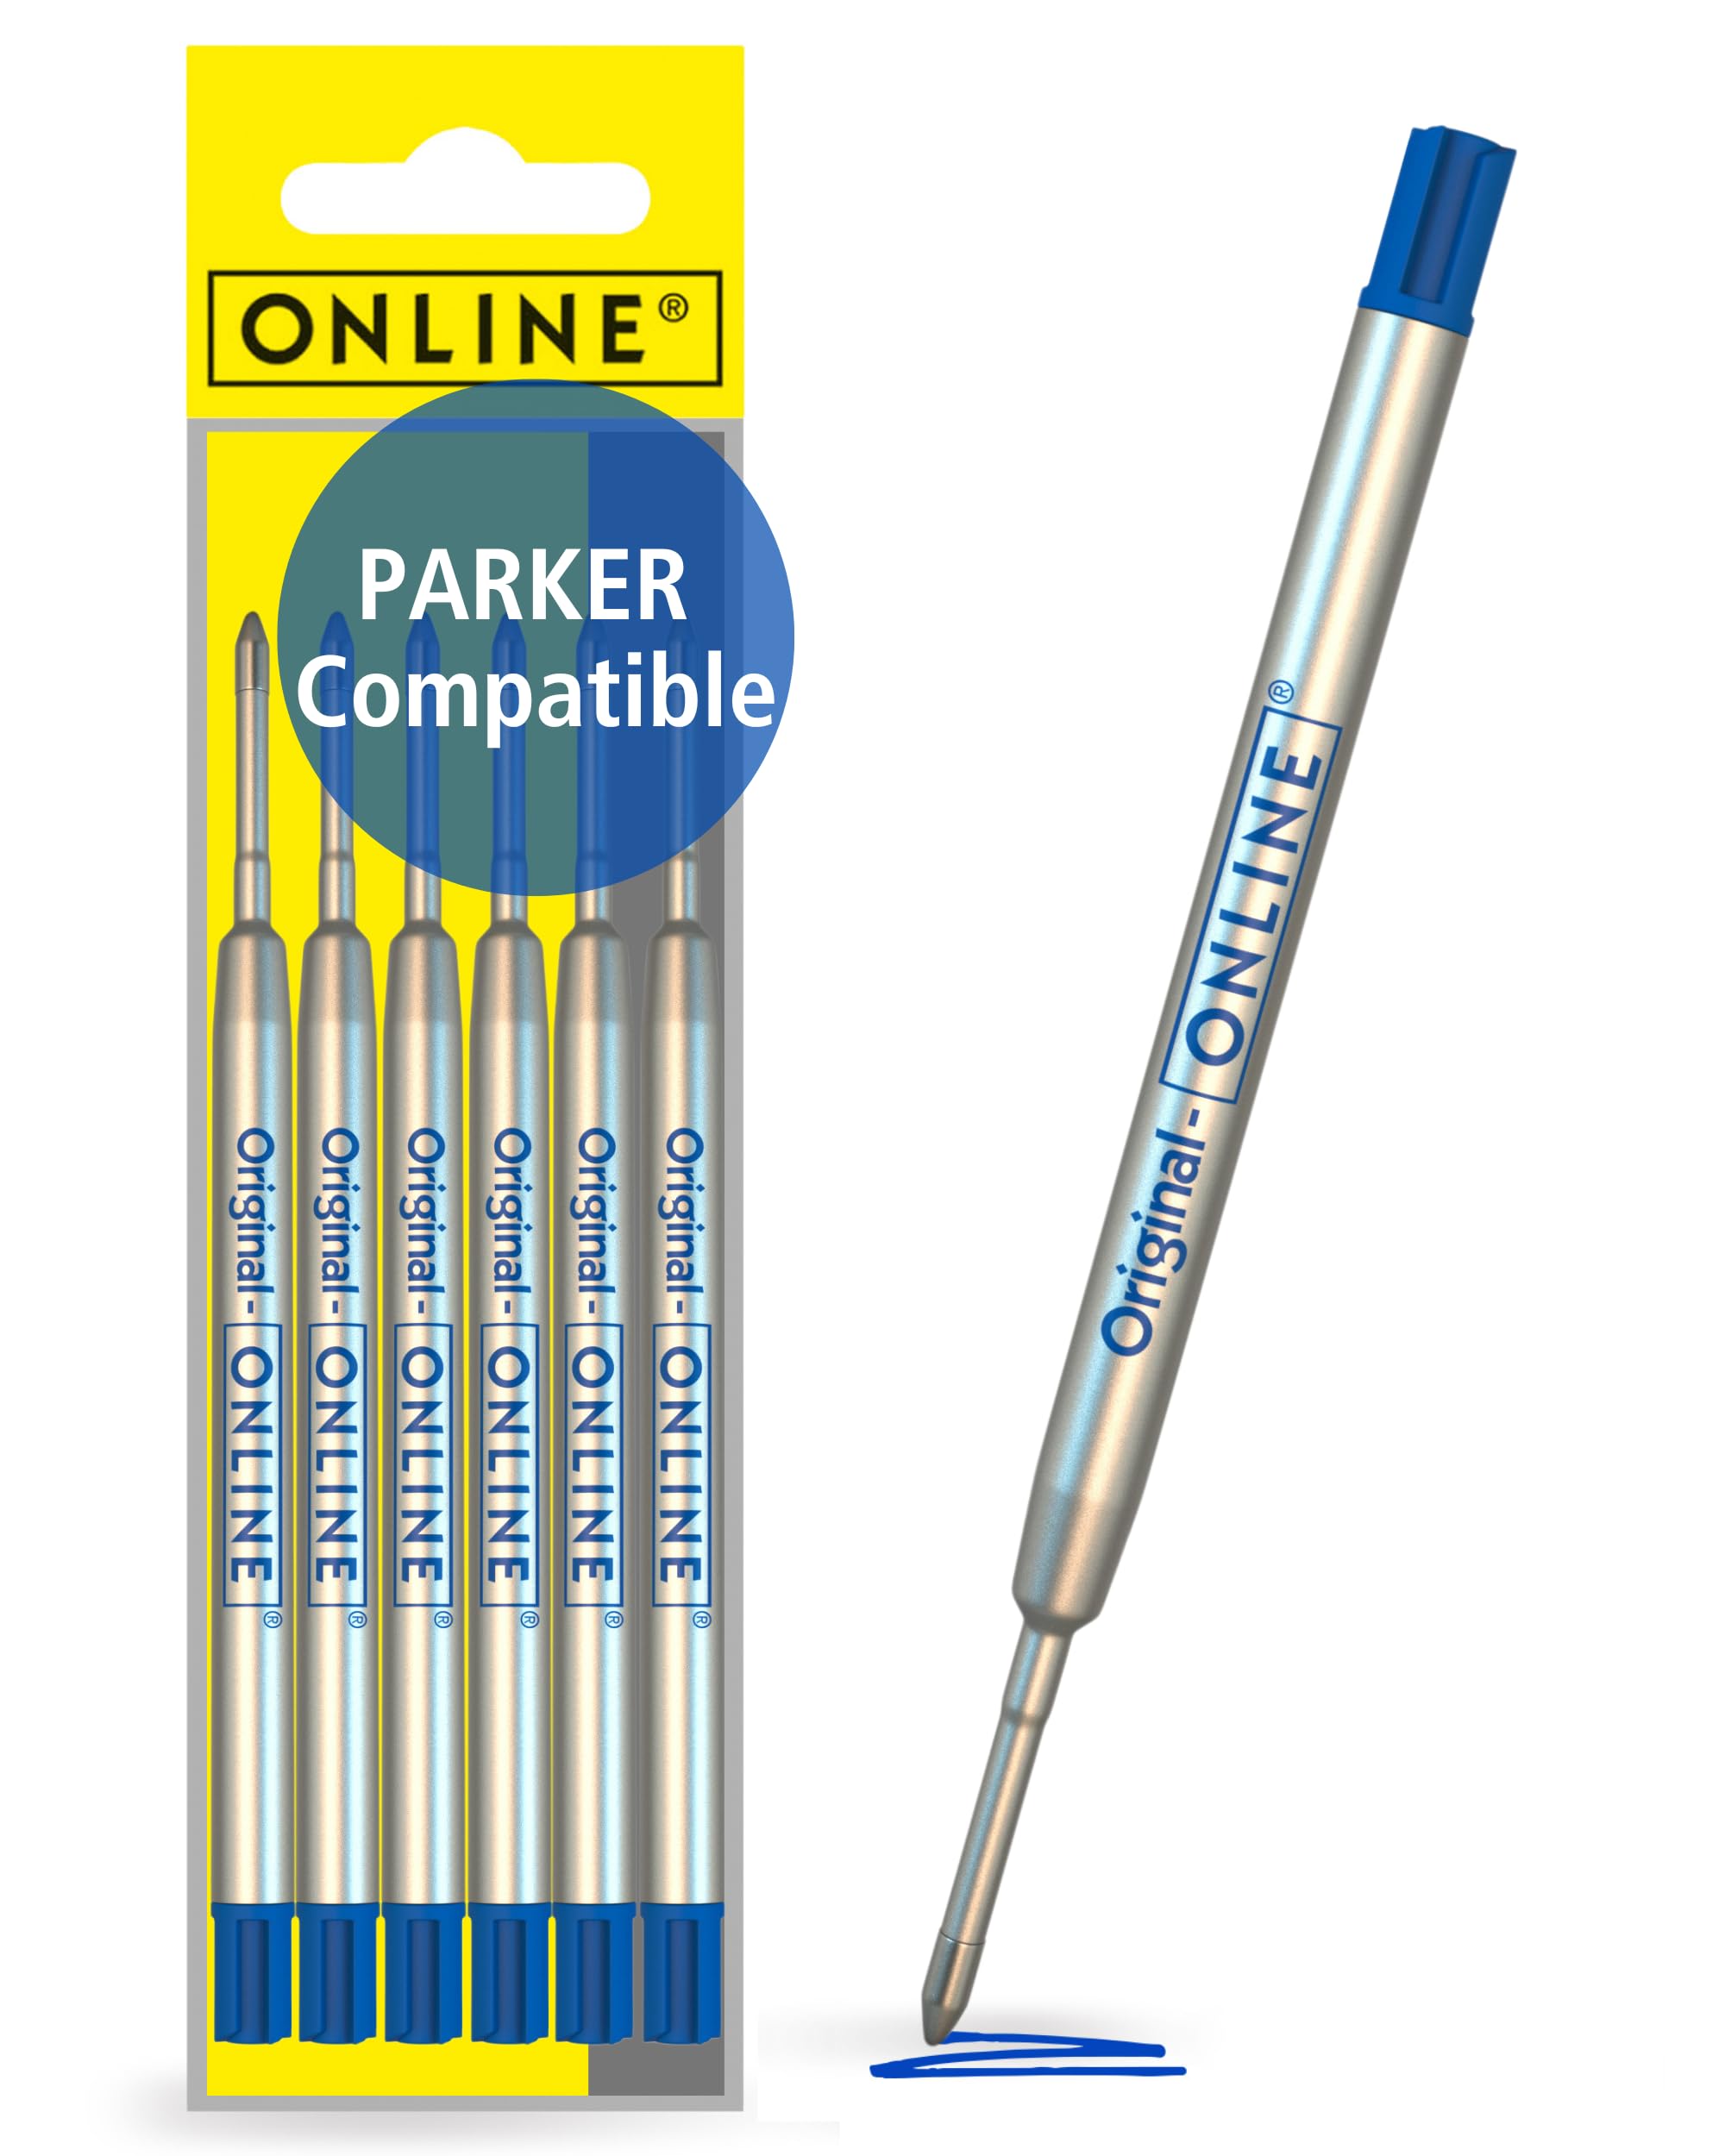 ONLINE 6X Ballpoint Pen Refills for Parker I Made in Switzerland I Works for Most Brands I Medium Tip I ONLINE International Standard B